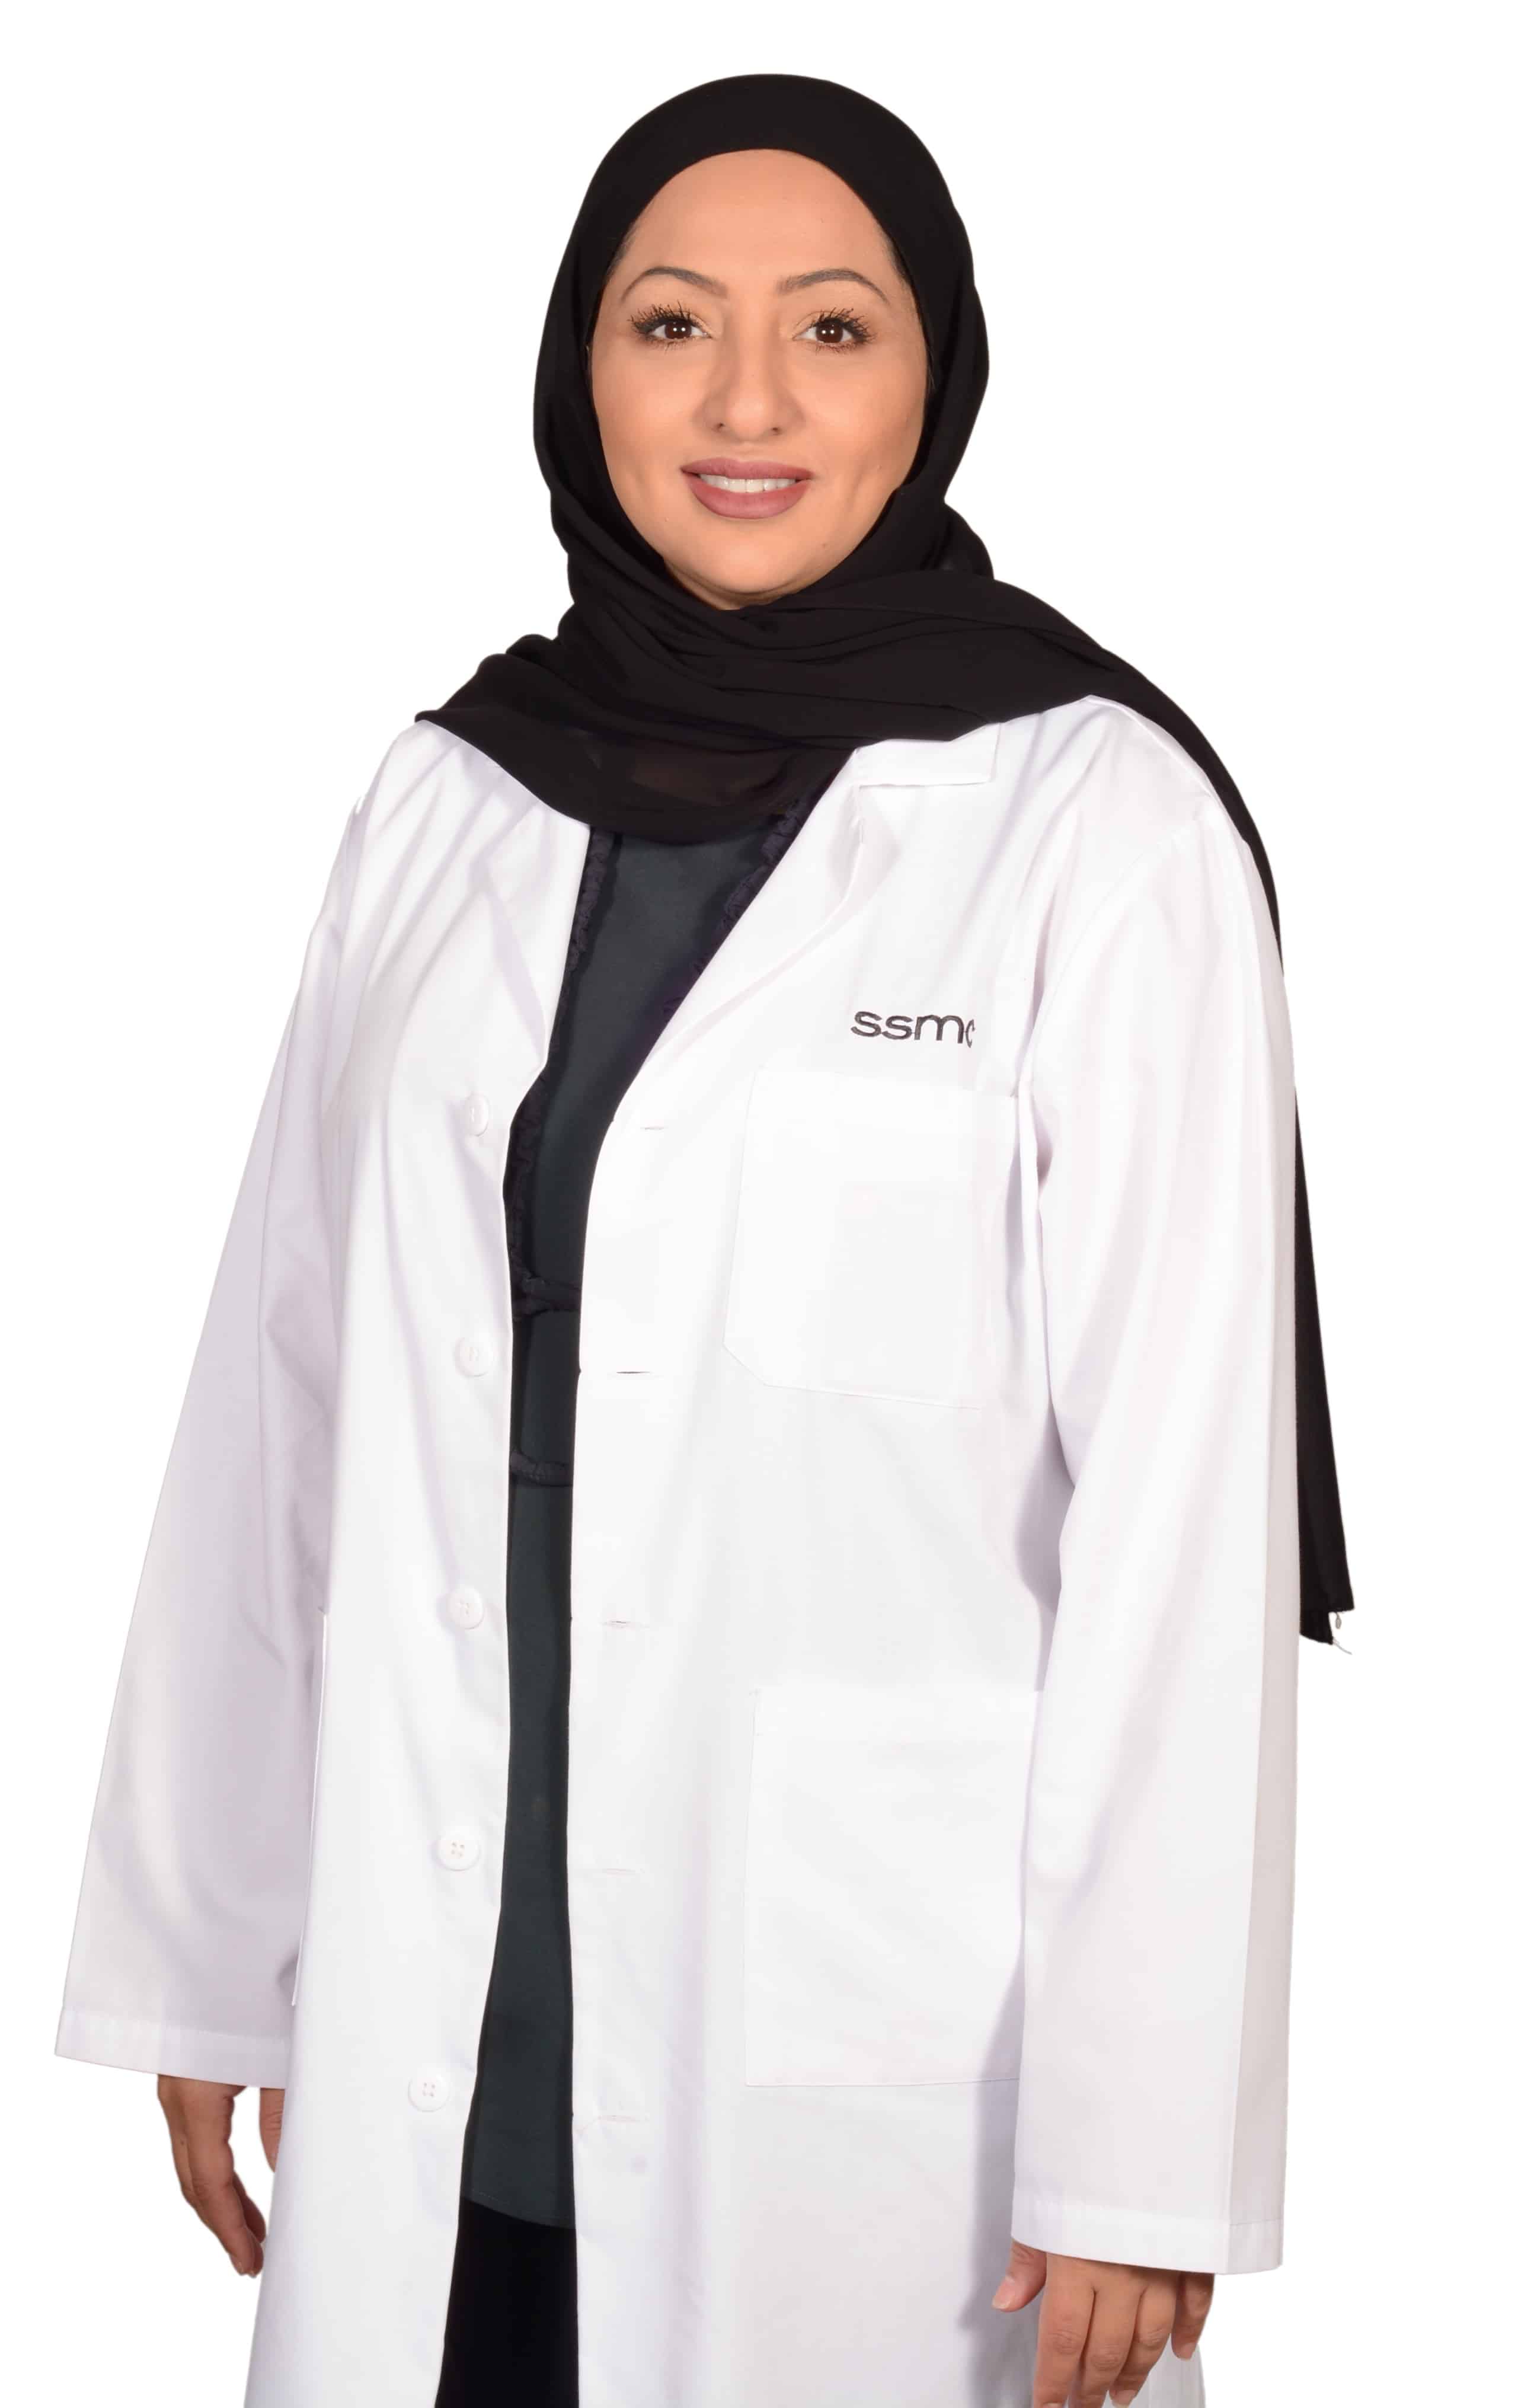 Dr. Hiba Alhumaidan